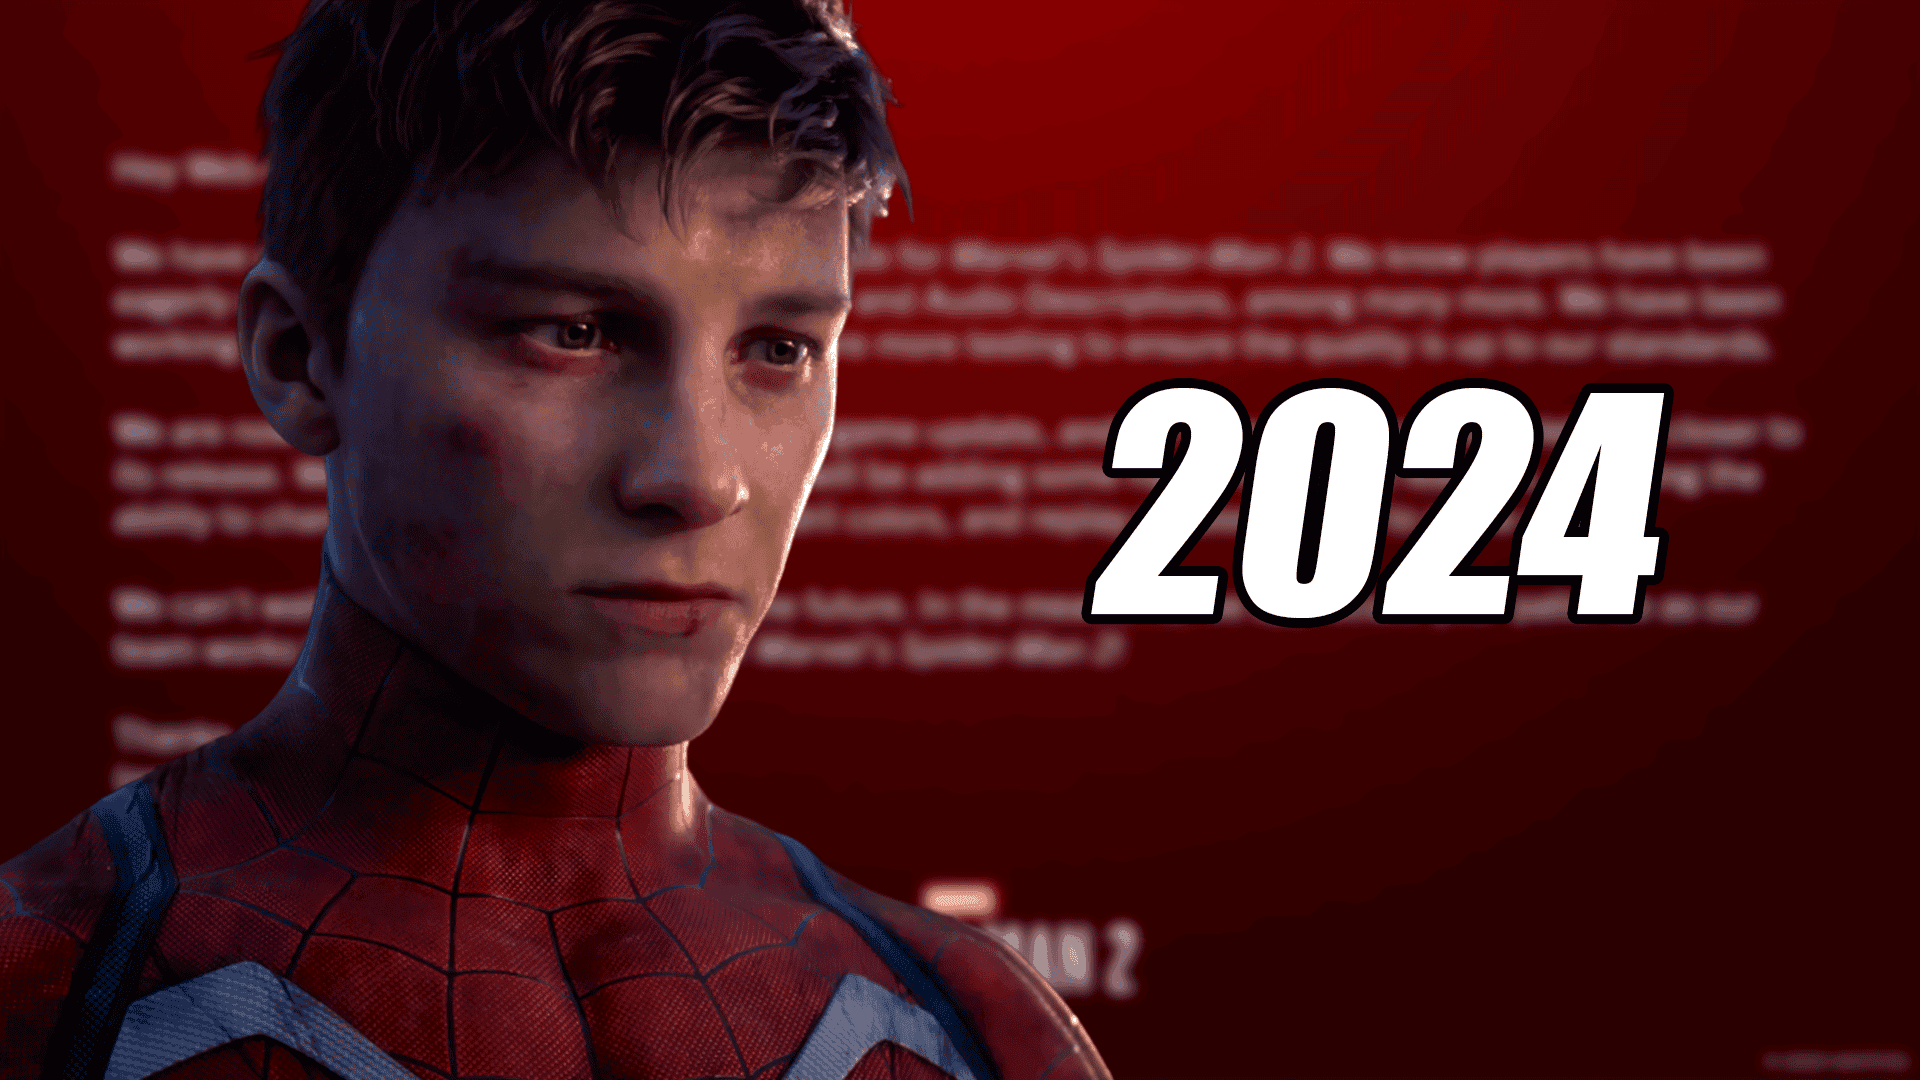 Marvel's Spider-Man 2 podría ser revelado muy pronto